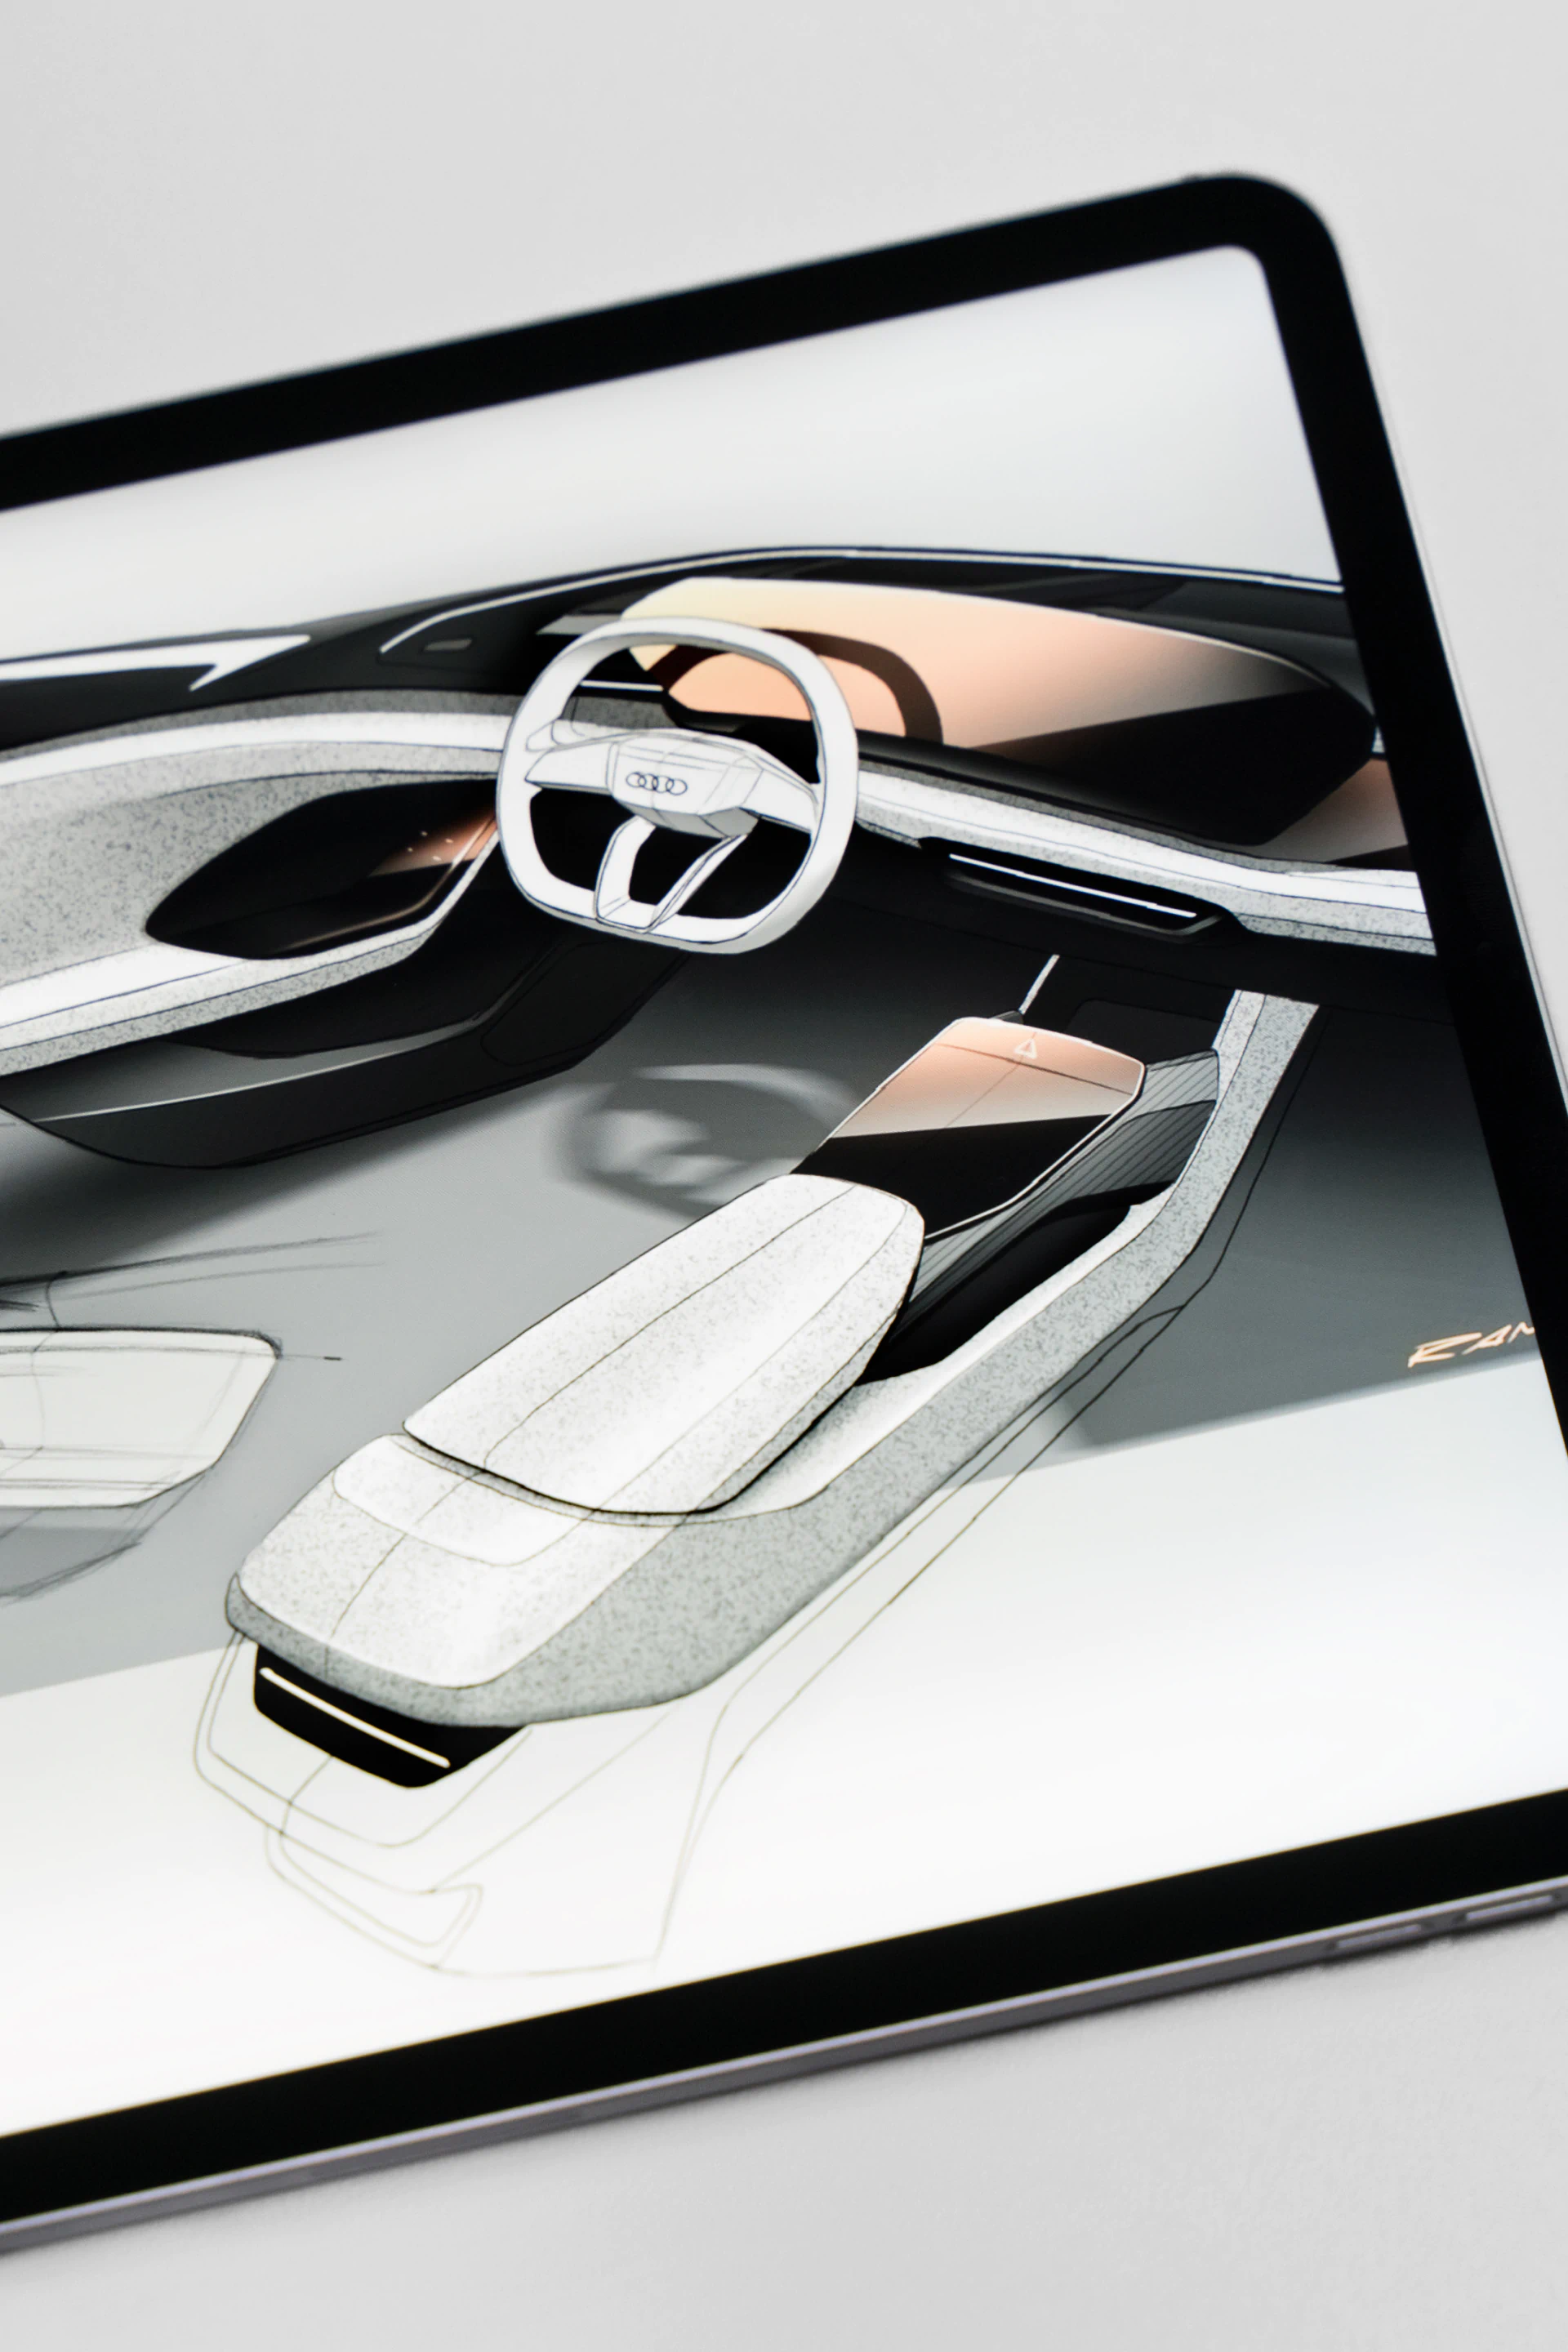 Digital design of the Q6 e-tron interior.